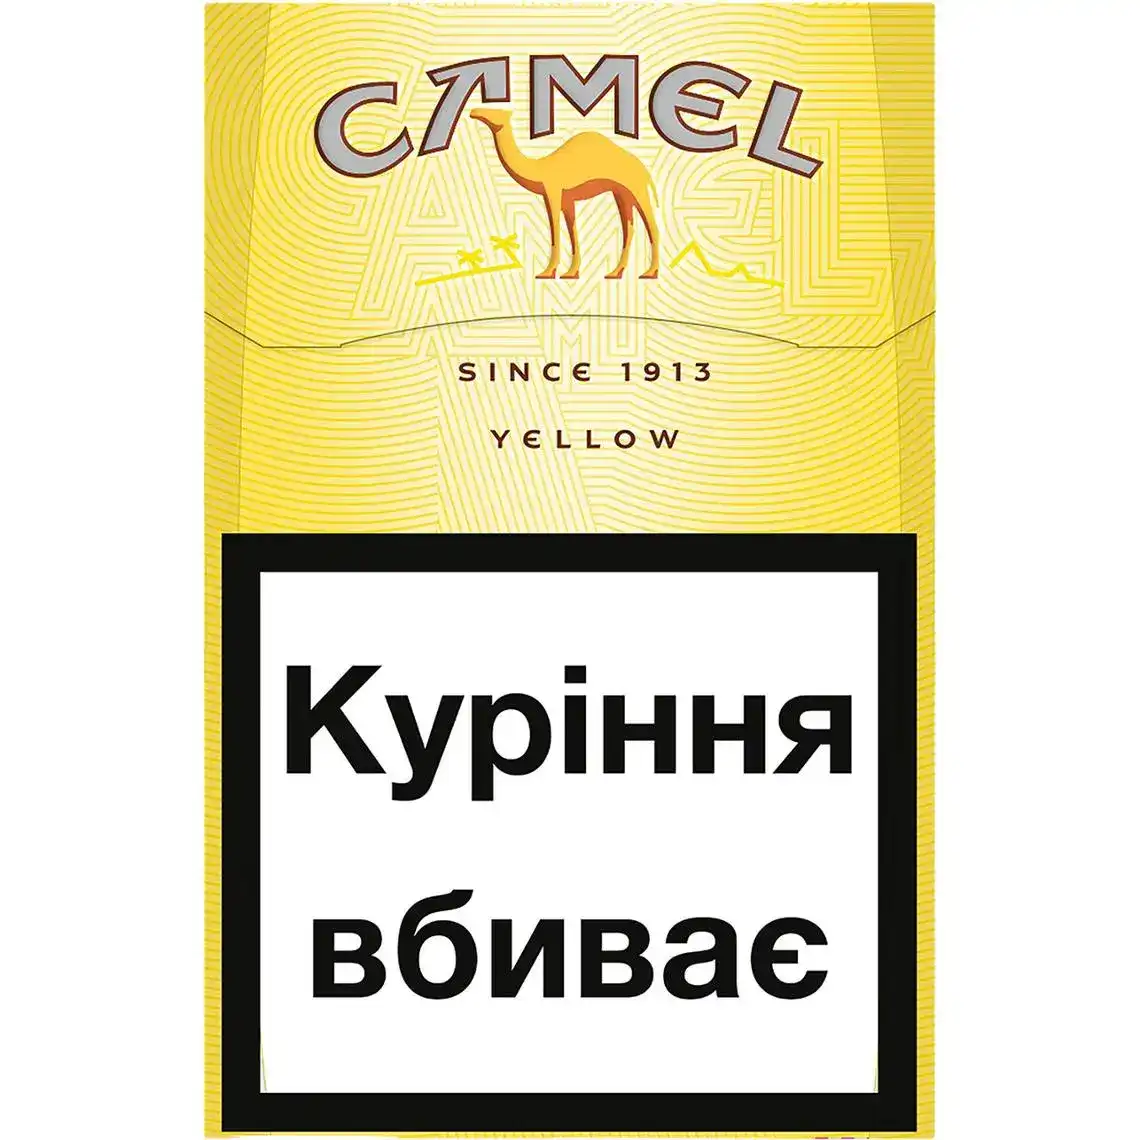 Цигарки Camel Yellow 20 шт.